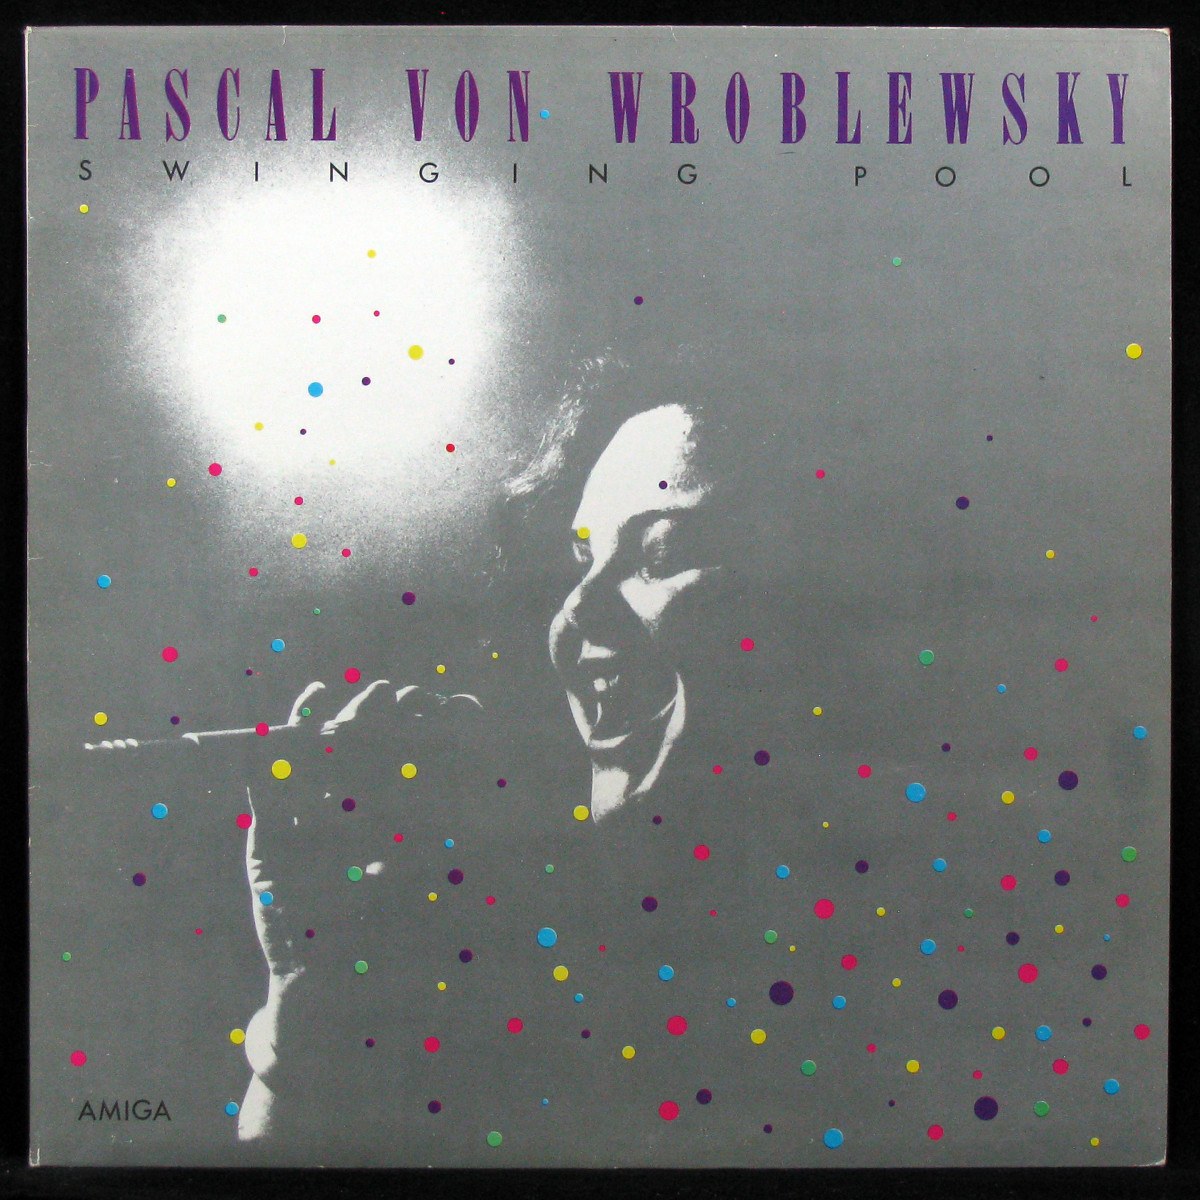 LP Pascal von Wroblewsky — Swinging Pool фото